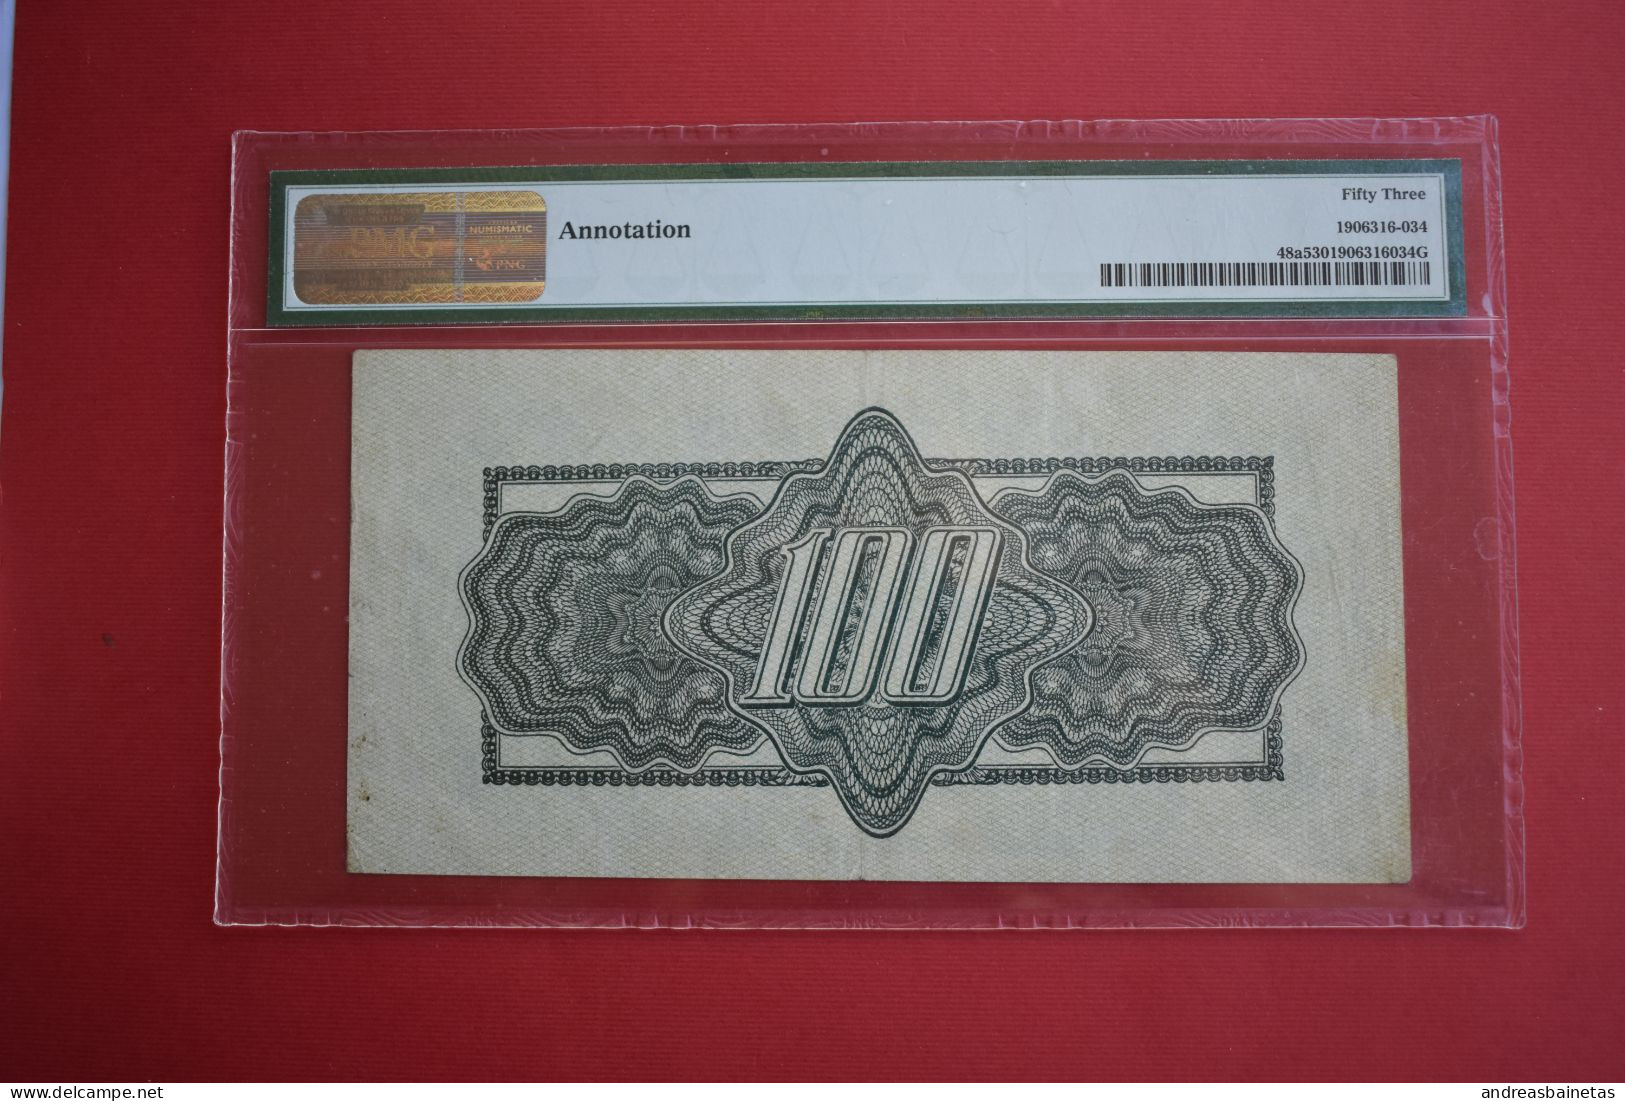 Banknotes Czechoslovakia  100 Korun 1944 PMG 53 Pick#48a - Tchécoslovaquie